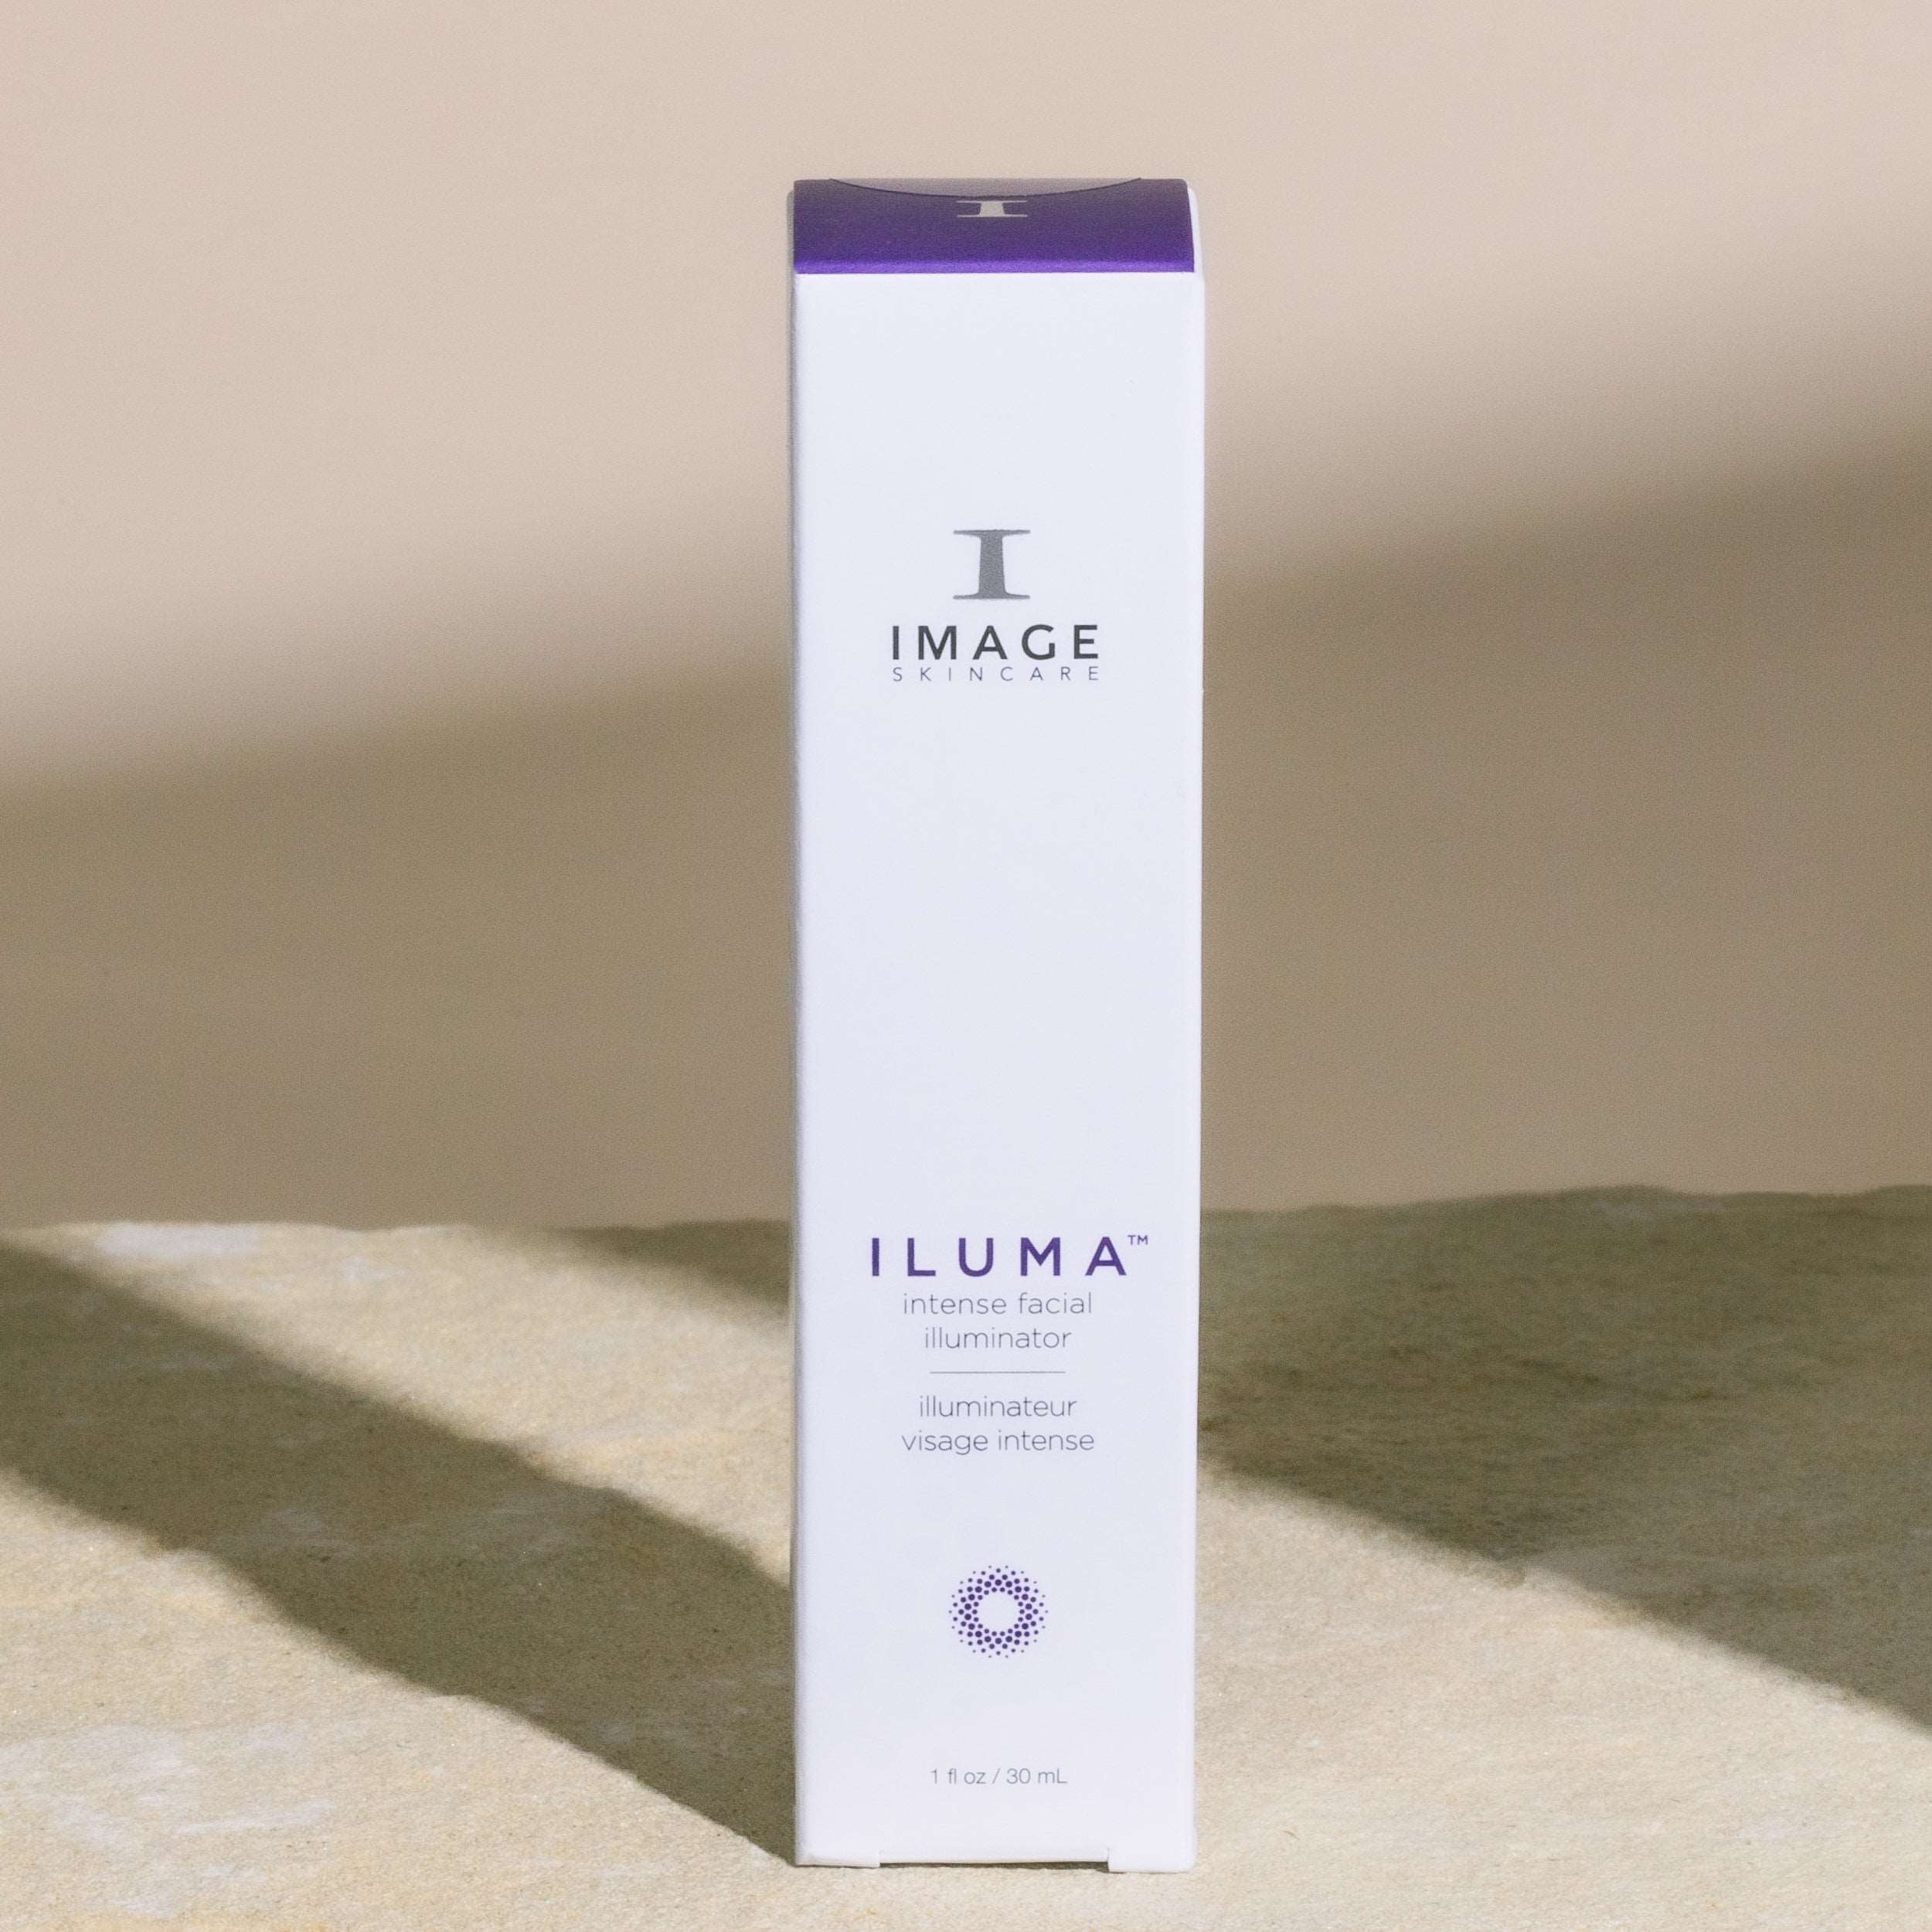 Iluma Intense Facial Illuminator Image Skincare